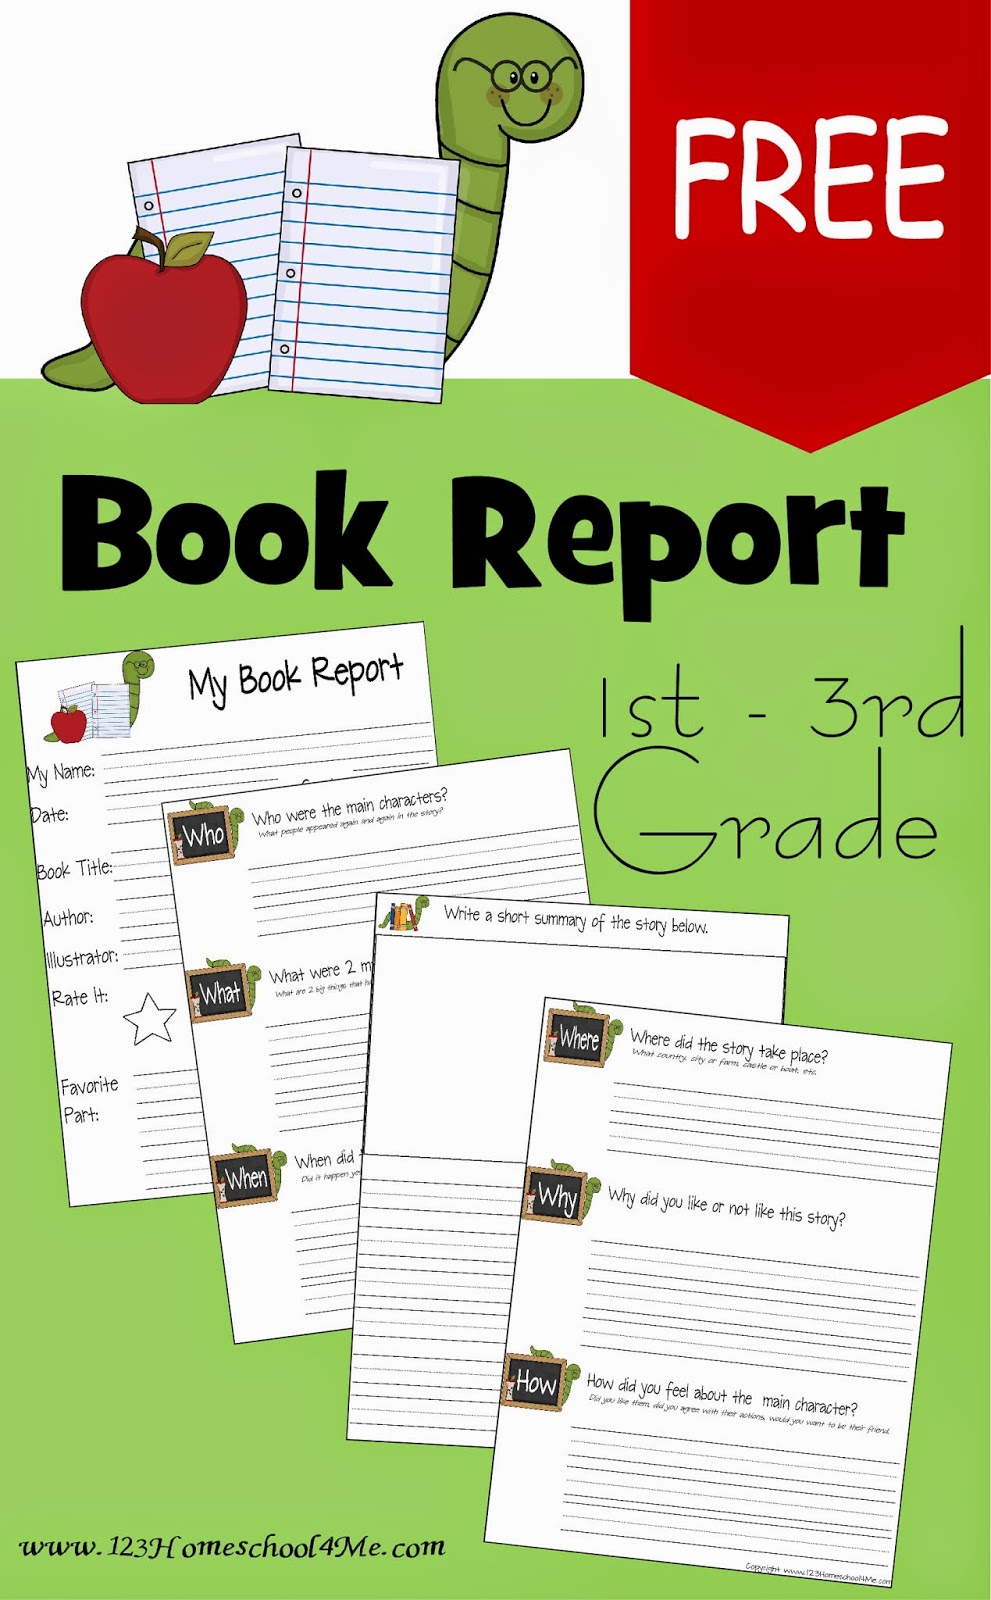 FREE Book Report Template - Educational Freebies Inside Second Grade Book Report Template